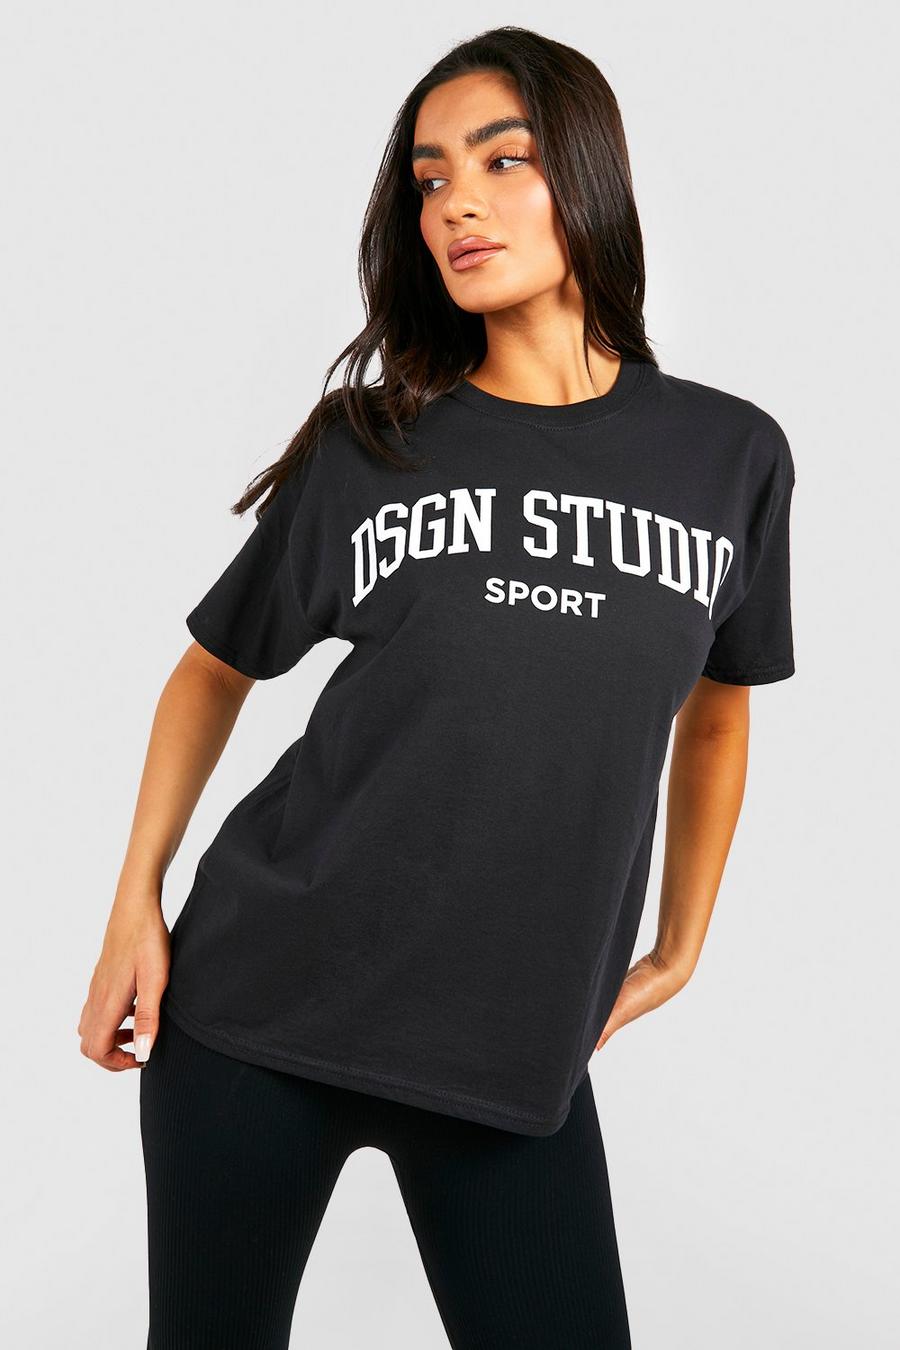 Black Dsgn Studio Sport Slogan Oversized T-shirt